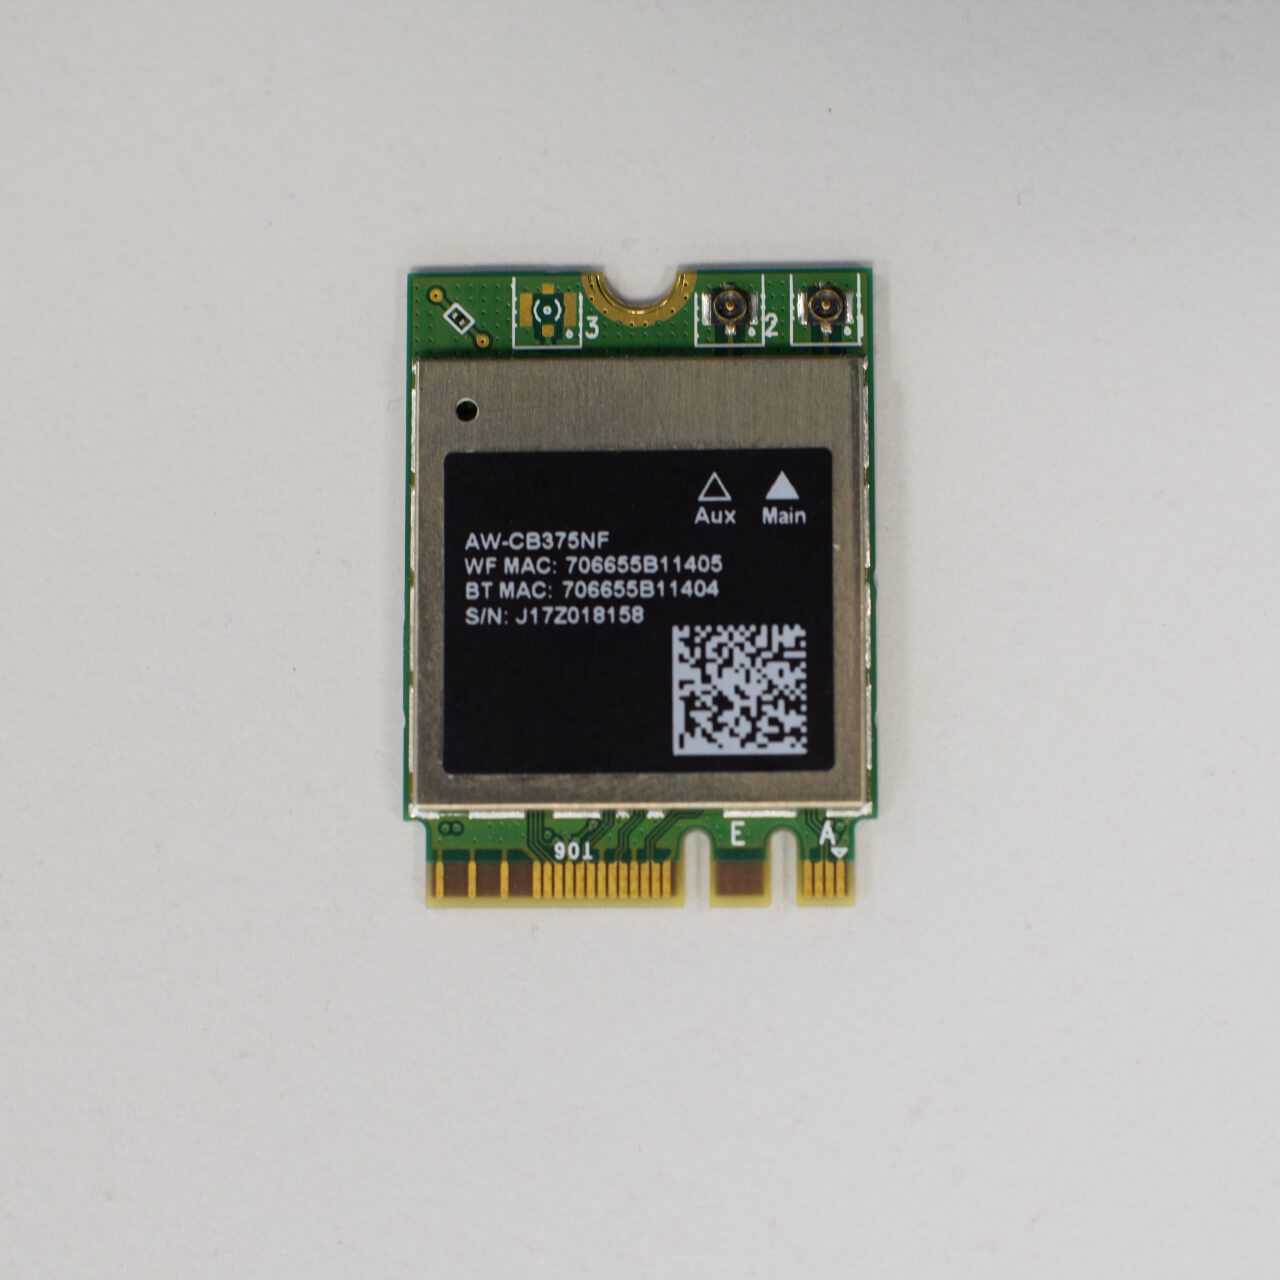 Realtek RTL8822CE M.2 Network Card Dual Band 802.11ac WiFi Bluetooth 5.0 Adapter